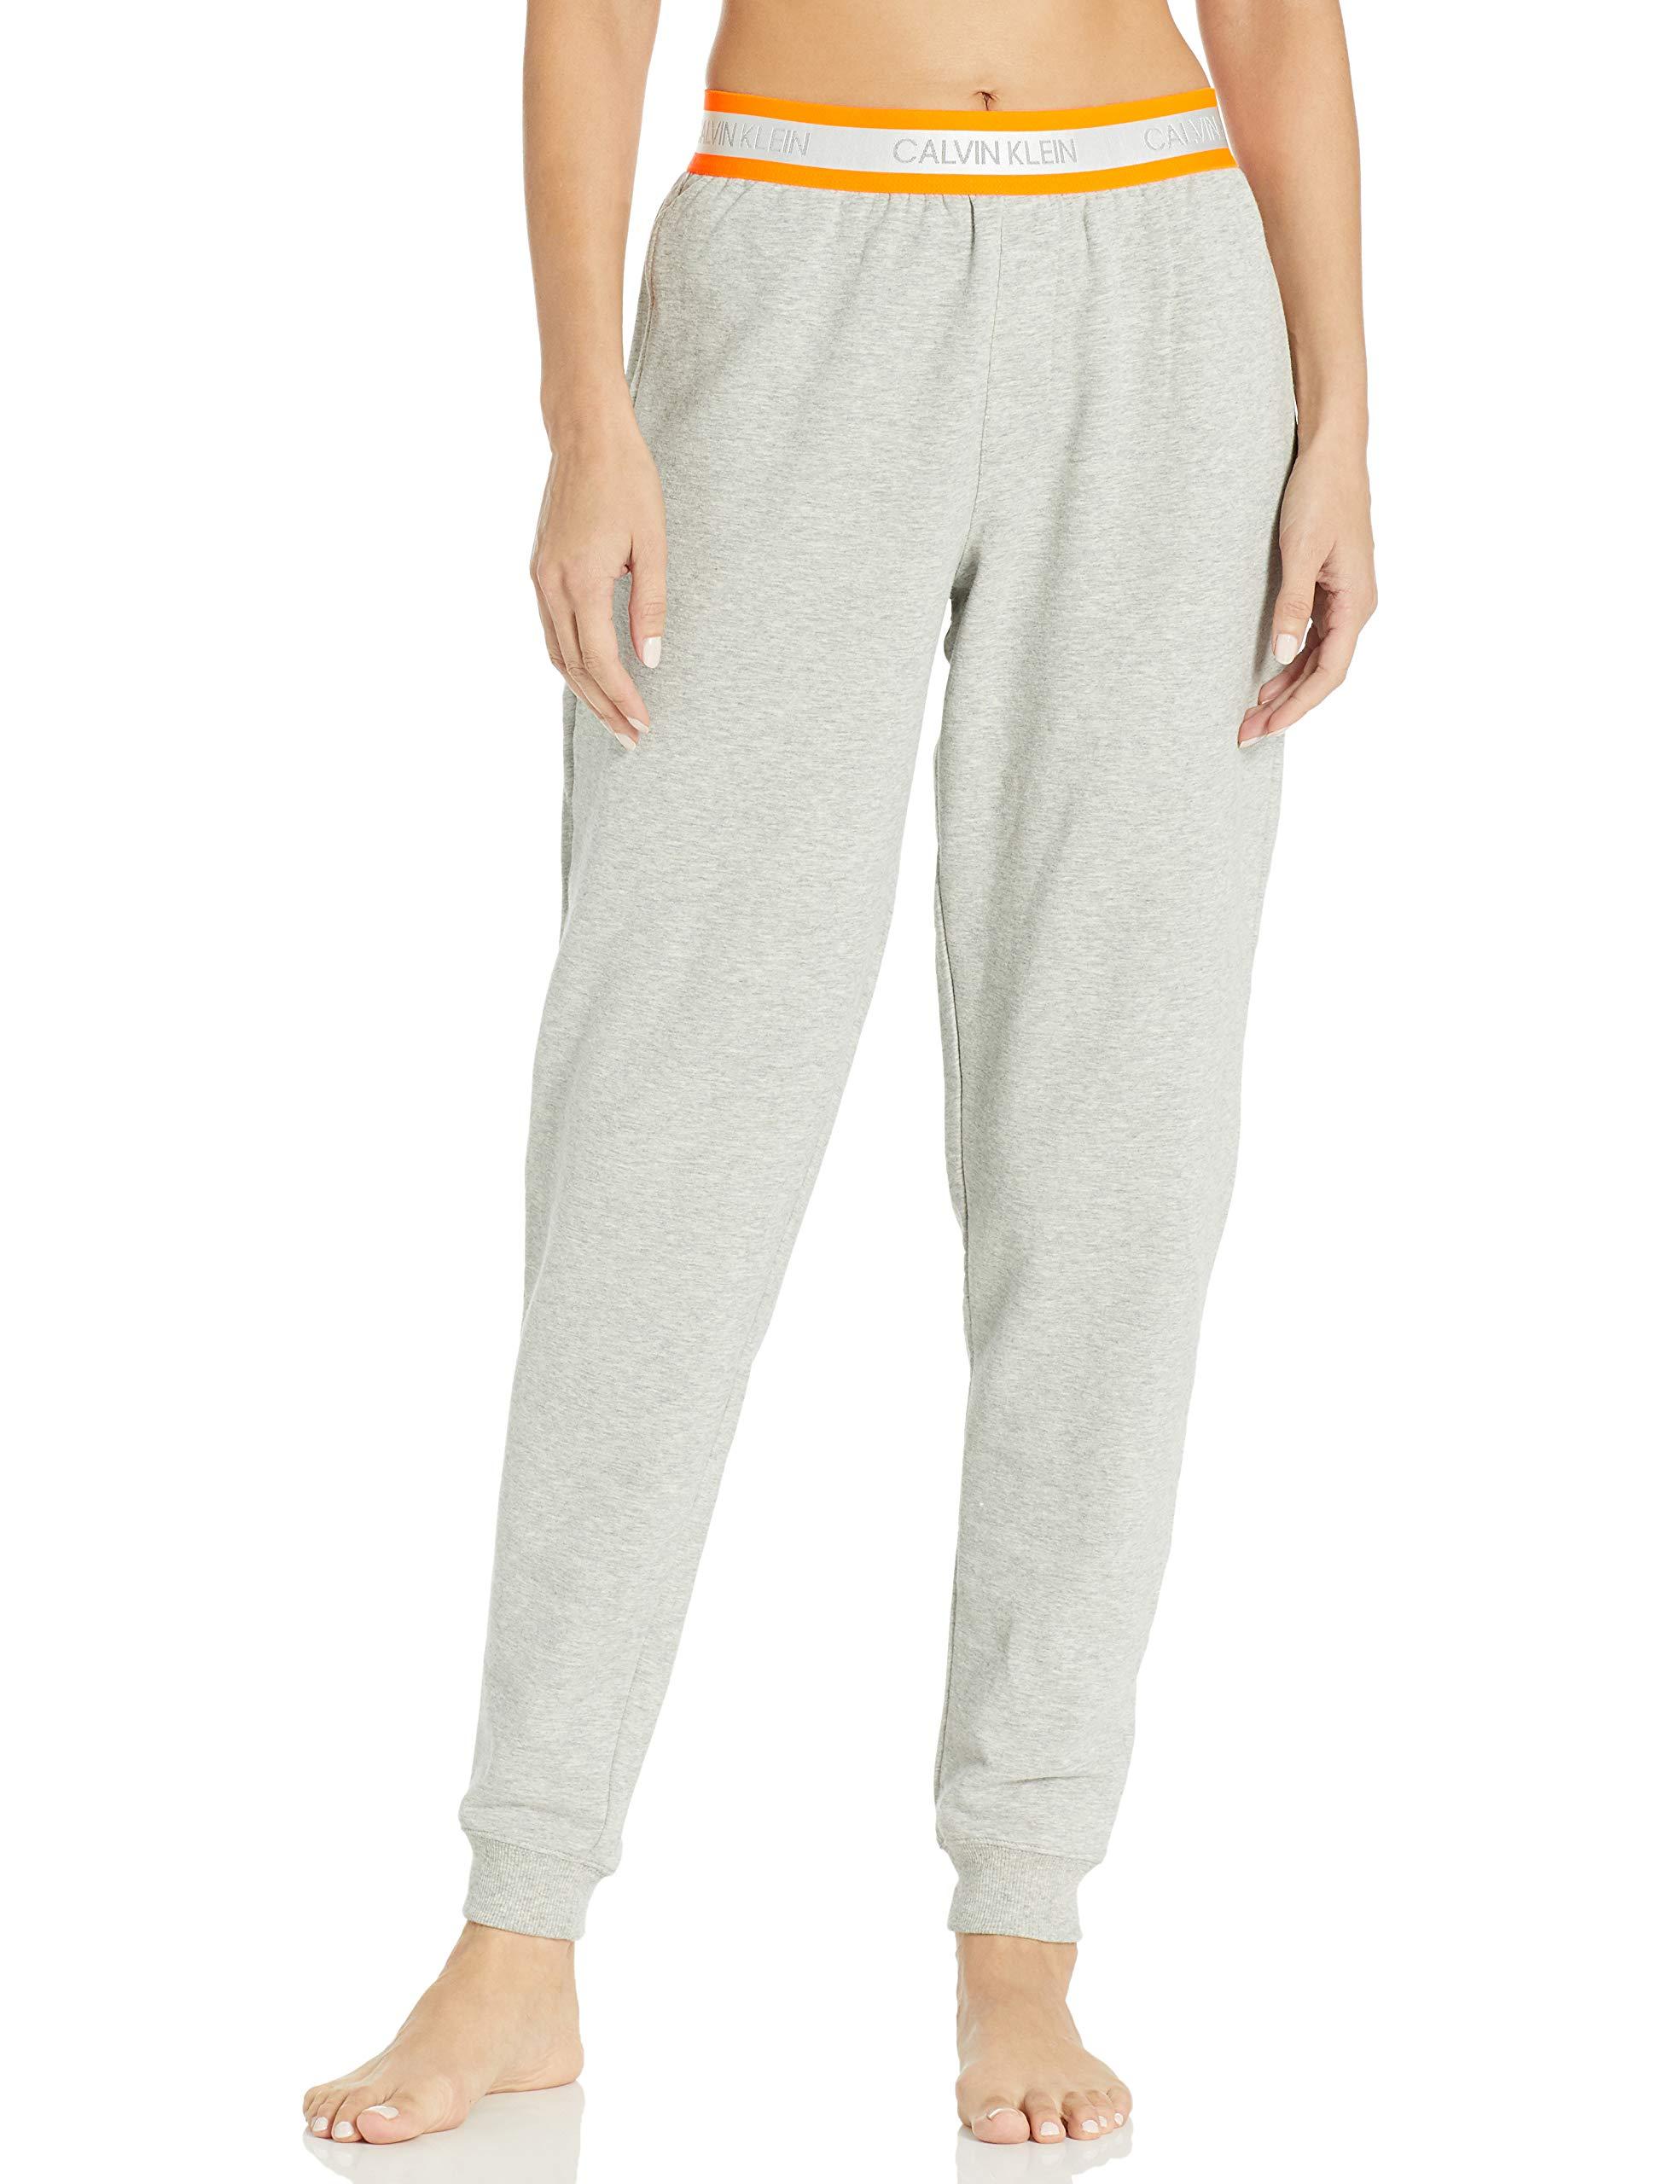 Calvin Klein Cotton Neon Jogger Sweatpant in Grey Heather (Gray) - Lyst